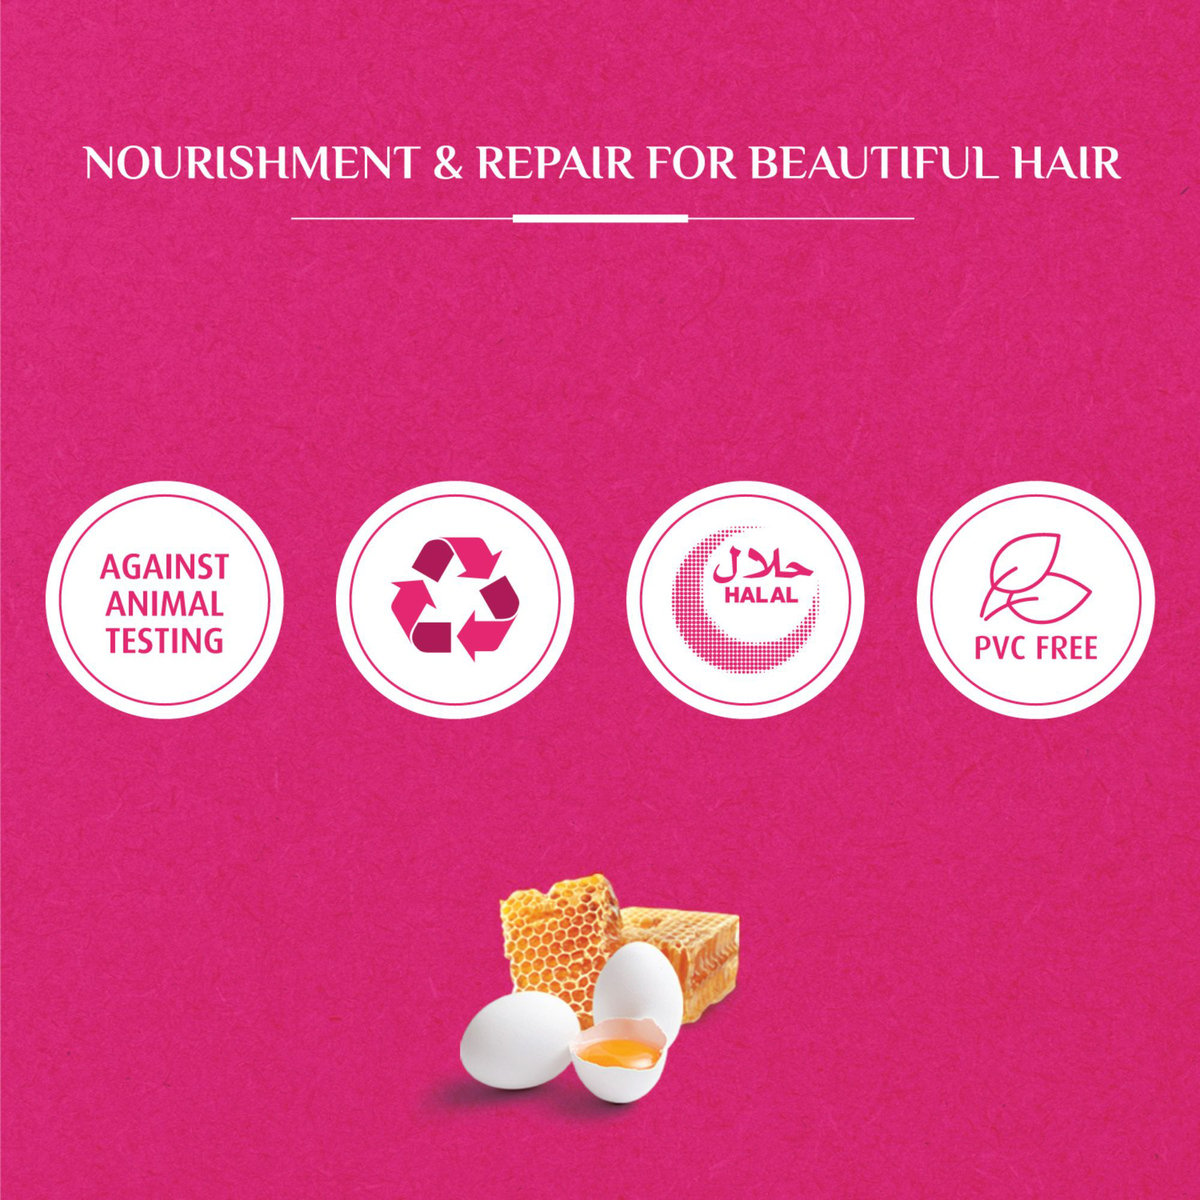 Vatika Naturals Repair & Restore Shampoo For Damage Hair, Split-Ends 700 ml